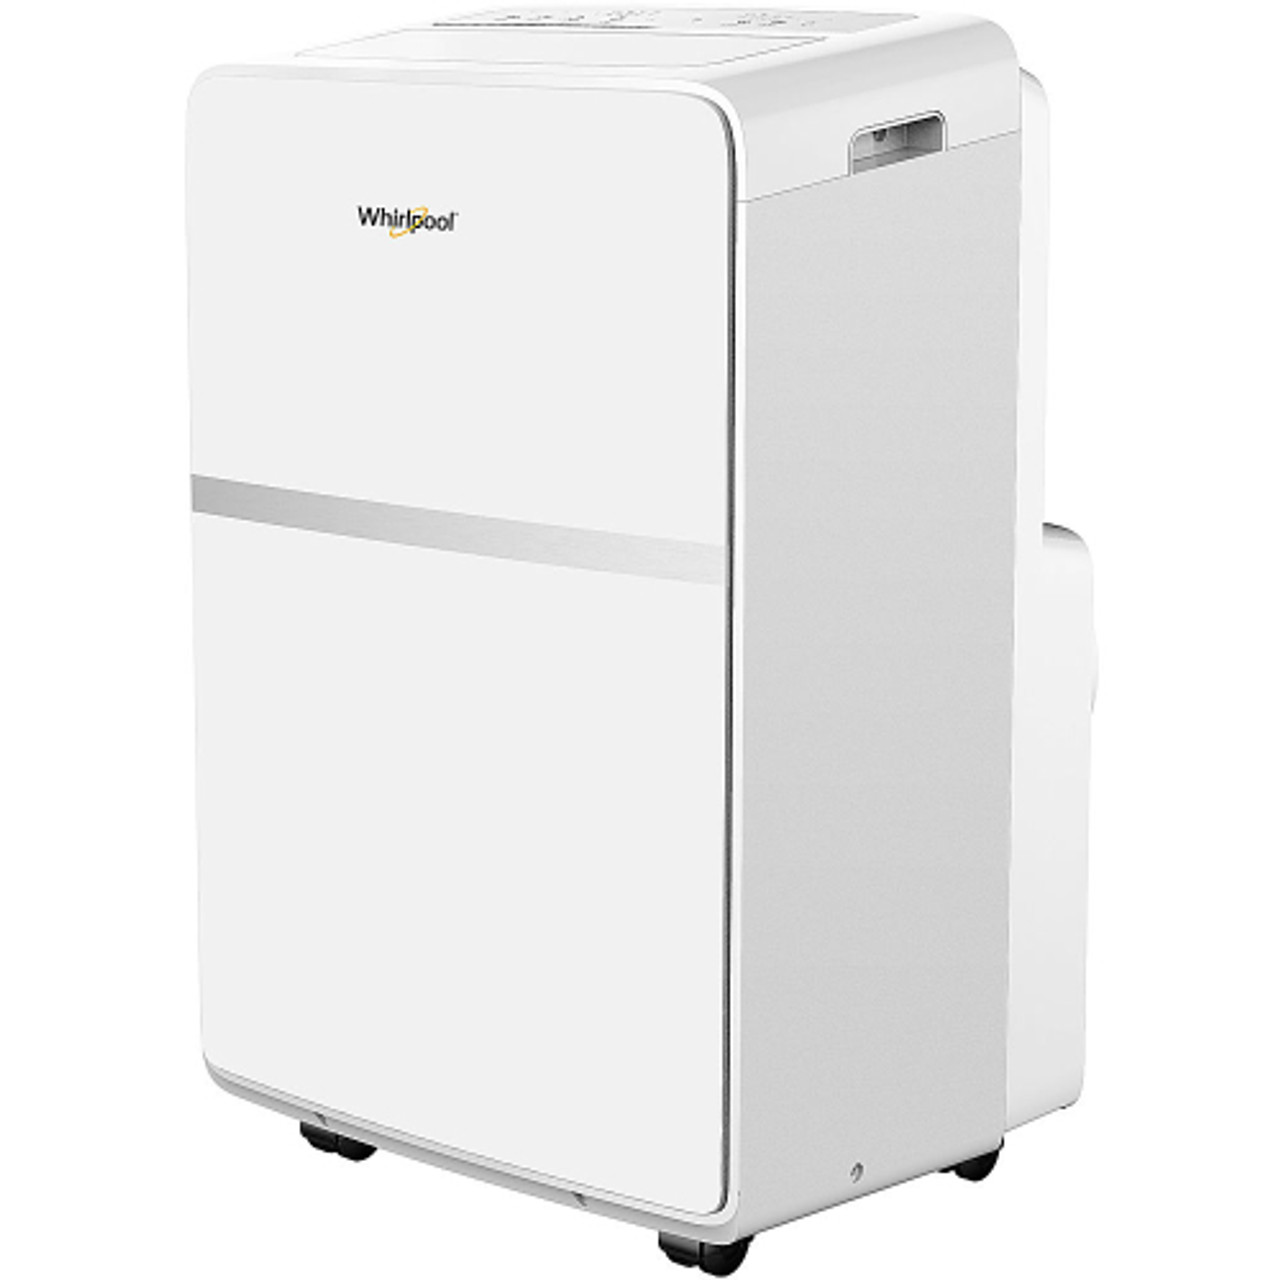 Whirlpool - 8000 BTU Portable Air Conditioner - White